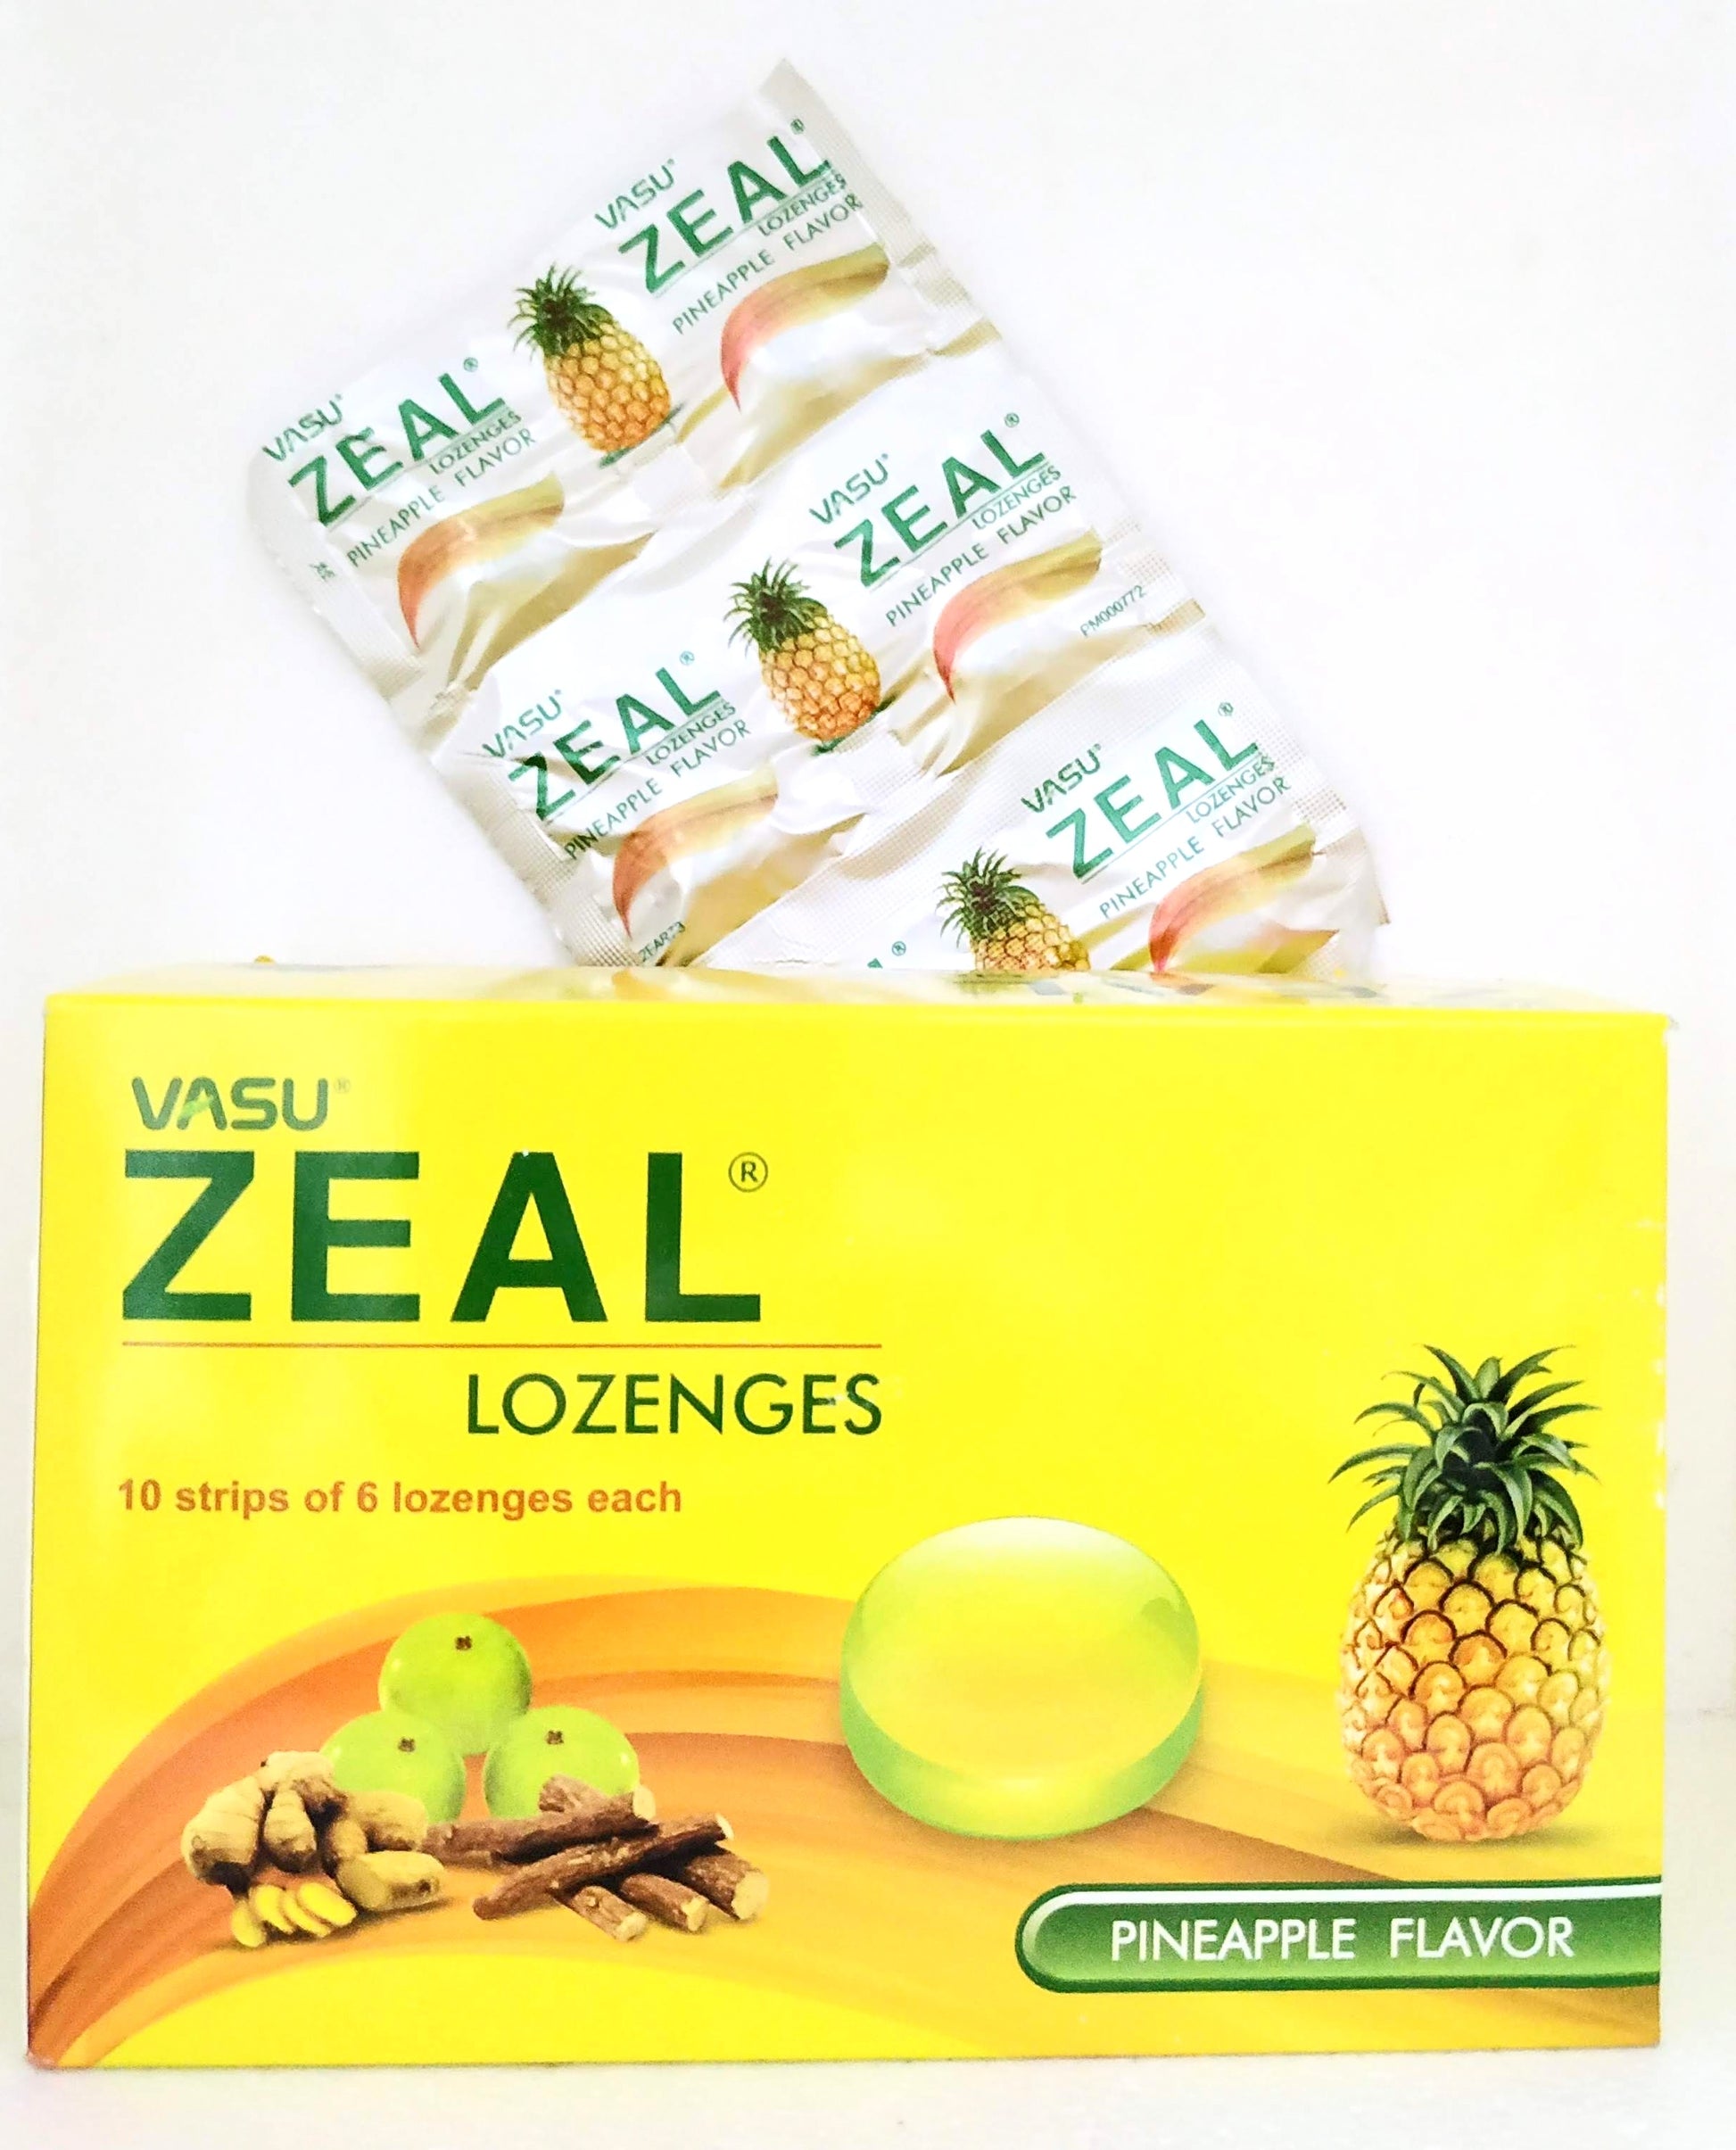 Shop Zeal lozenges - 6lozenges at price 30.00 from Vasu herbals Online - Ayush Care